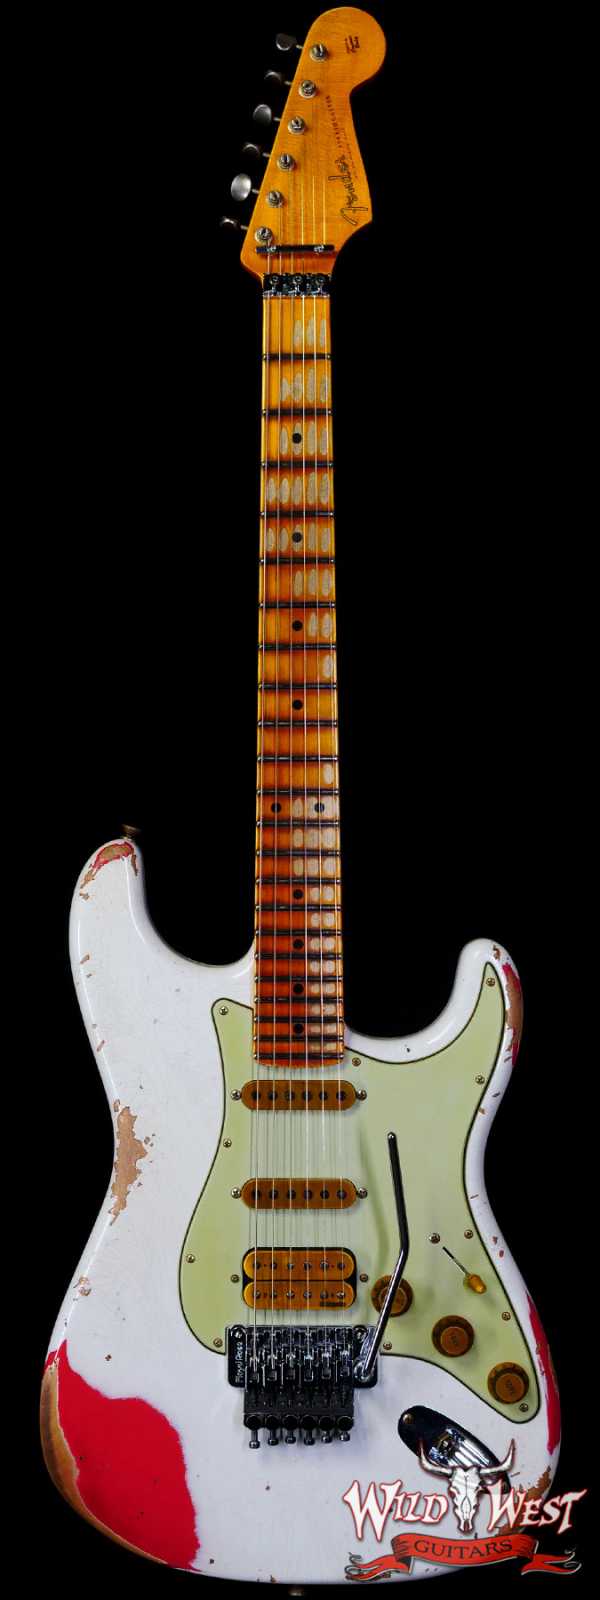 Fender Custom Shop Wild West White Lightning Stratocaster HSS Floyd Rose Maple Board 22 Frets Heavy Relic Fiesta Red